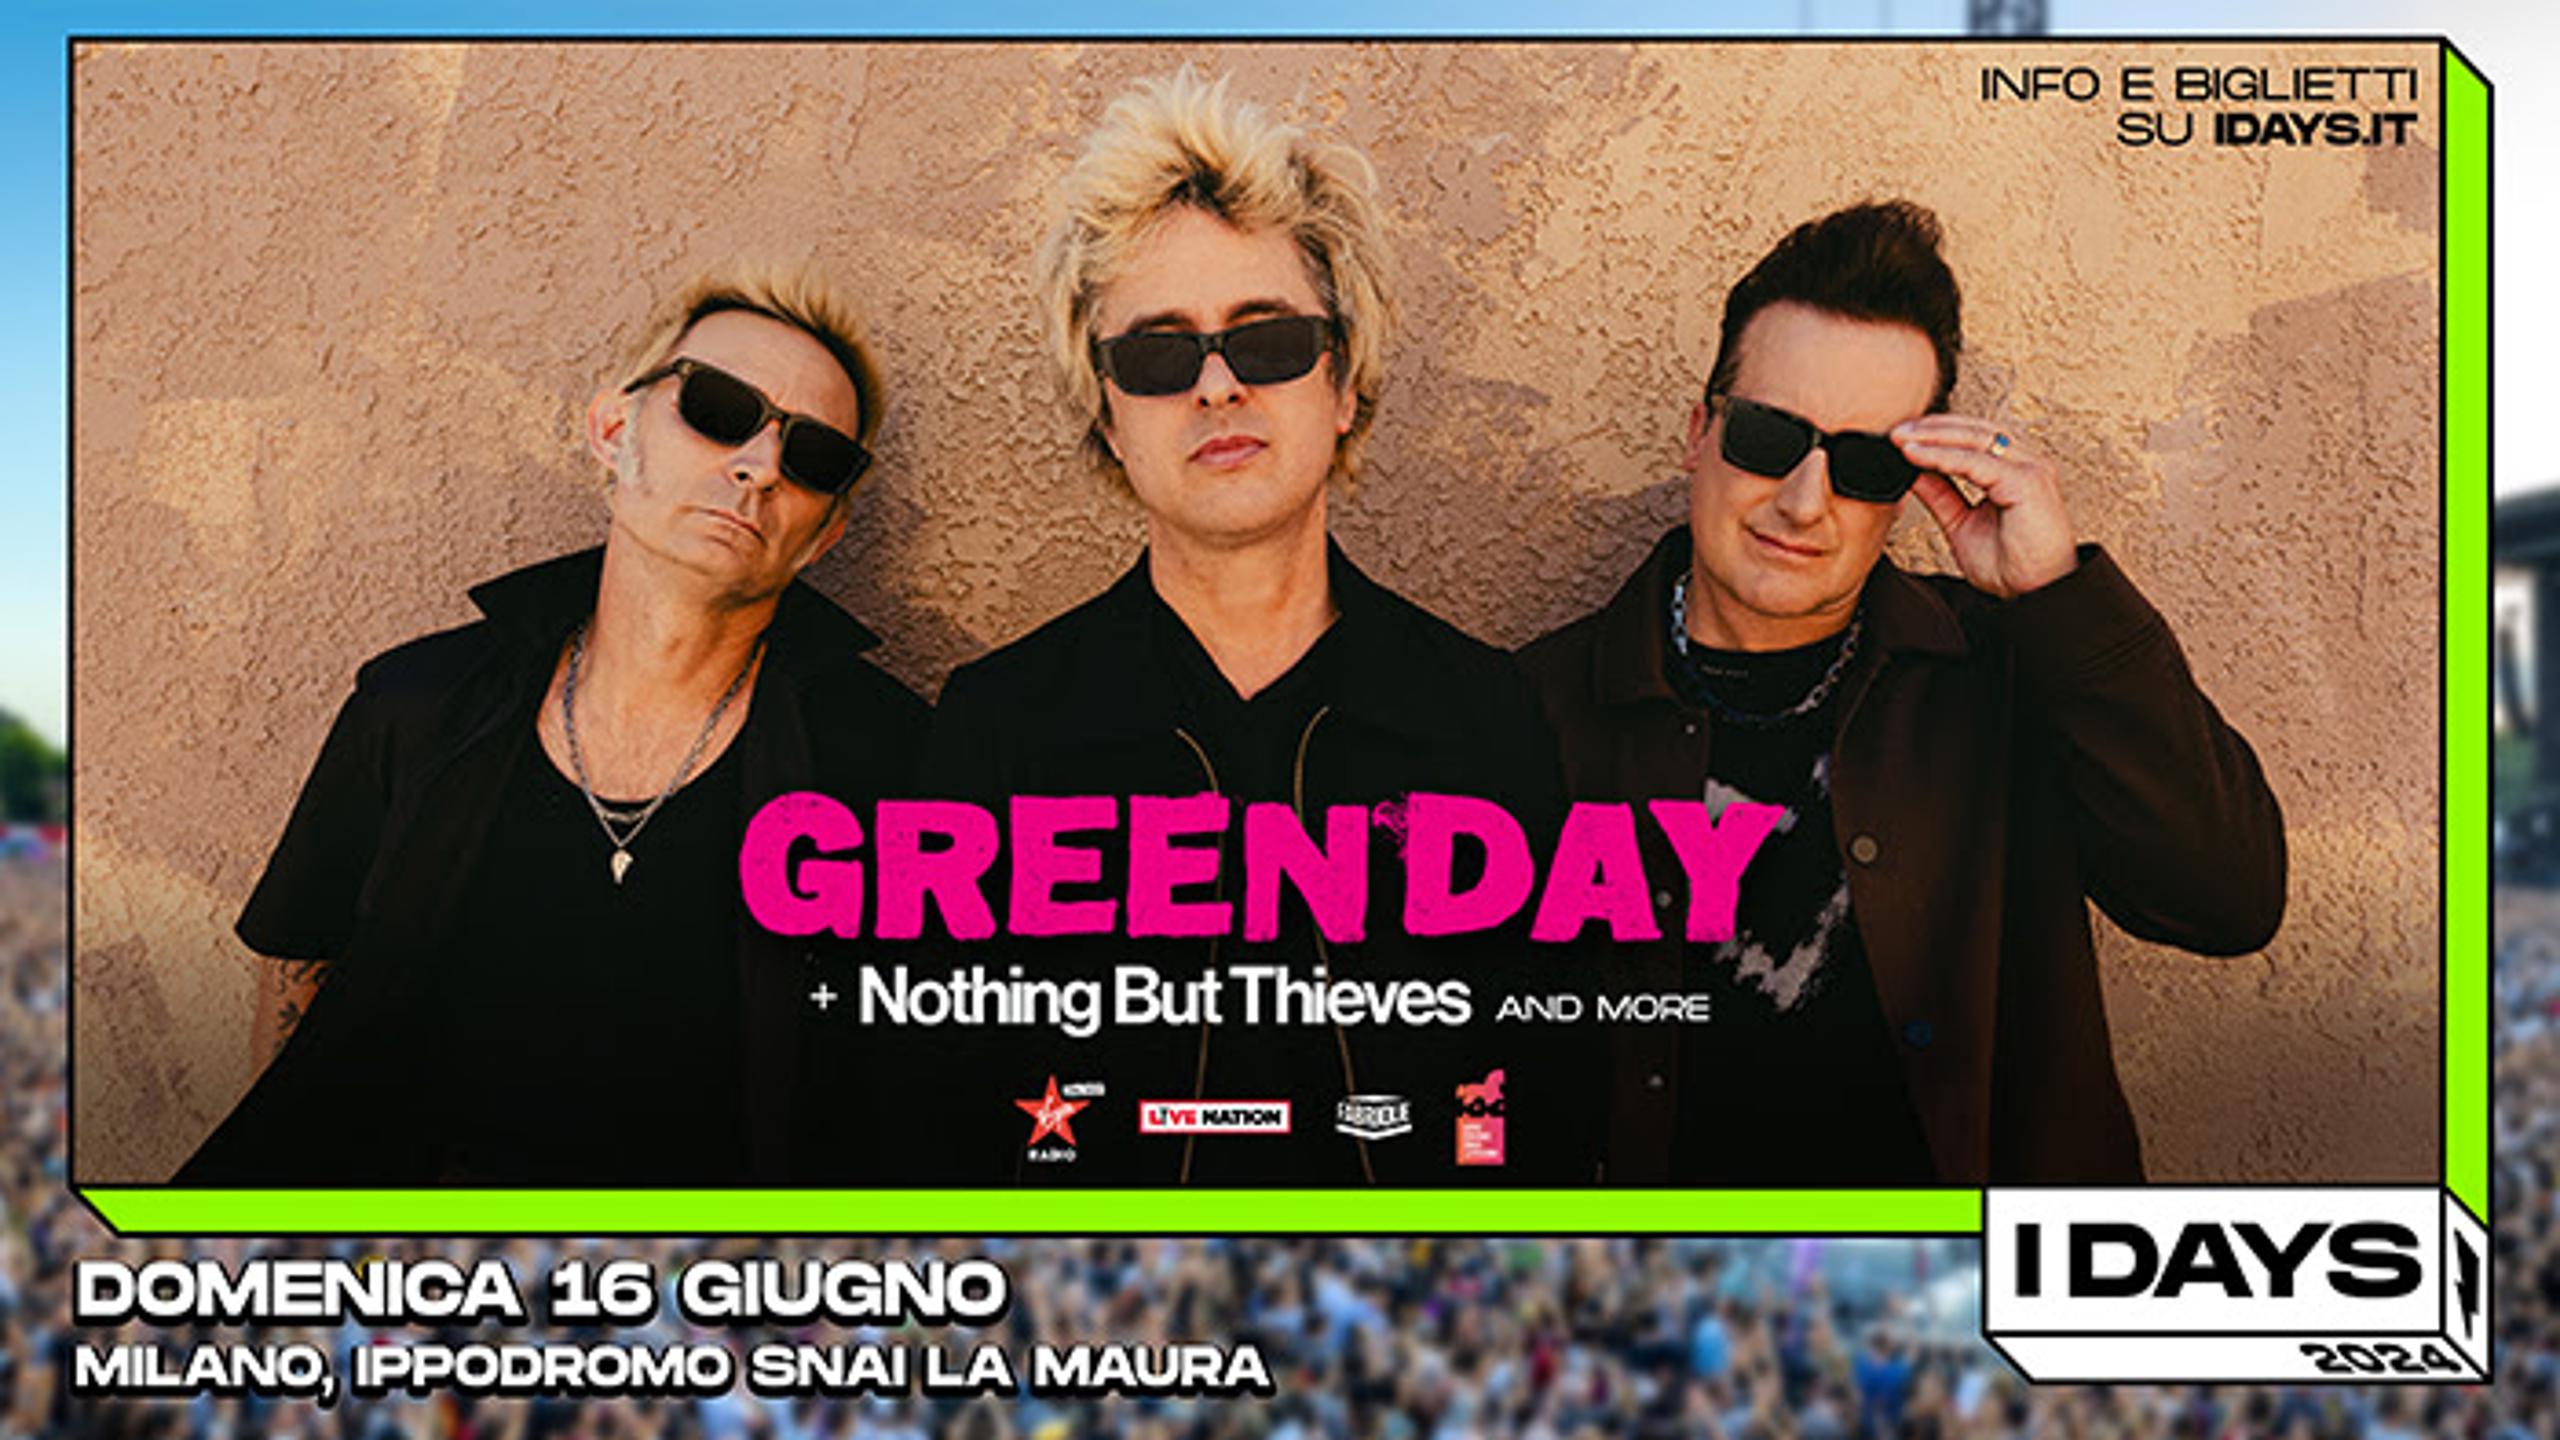 Billets Green Day (Ippodromo Snai San Siro - Milan)